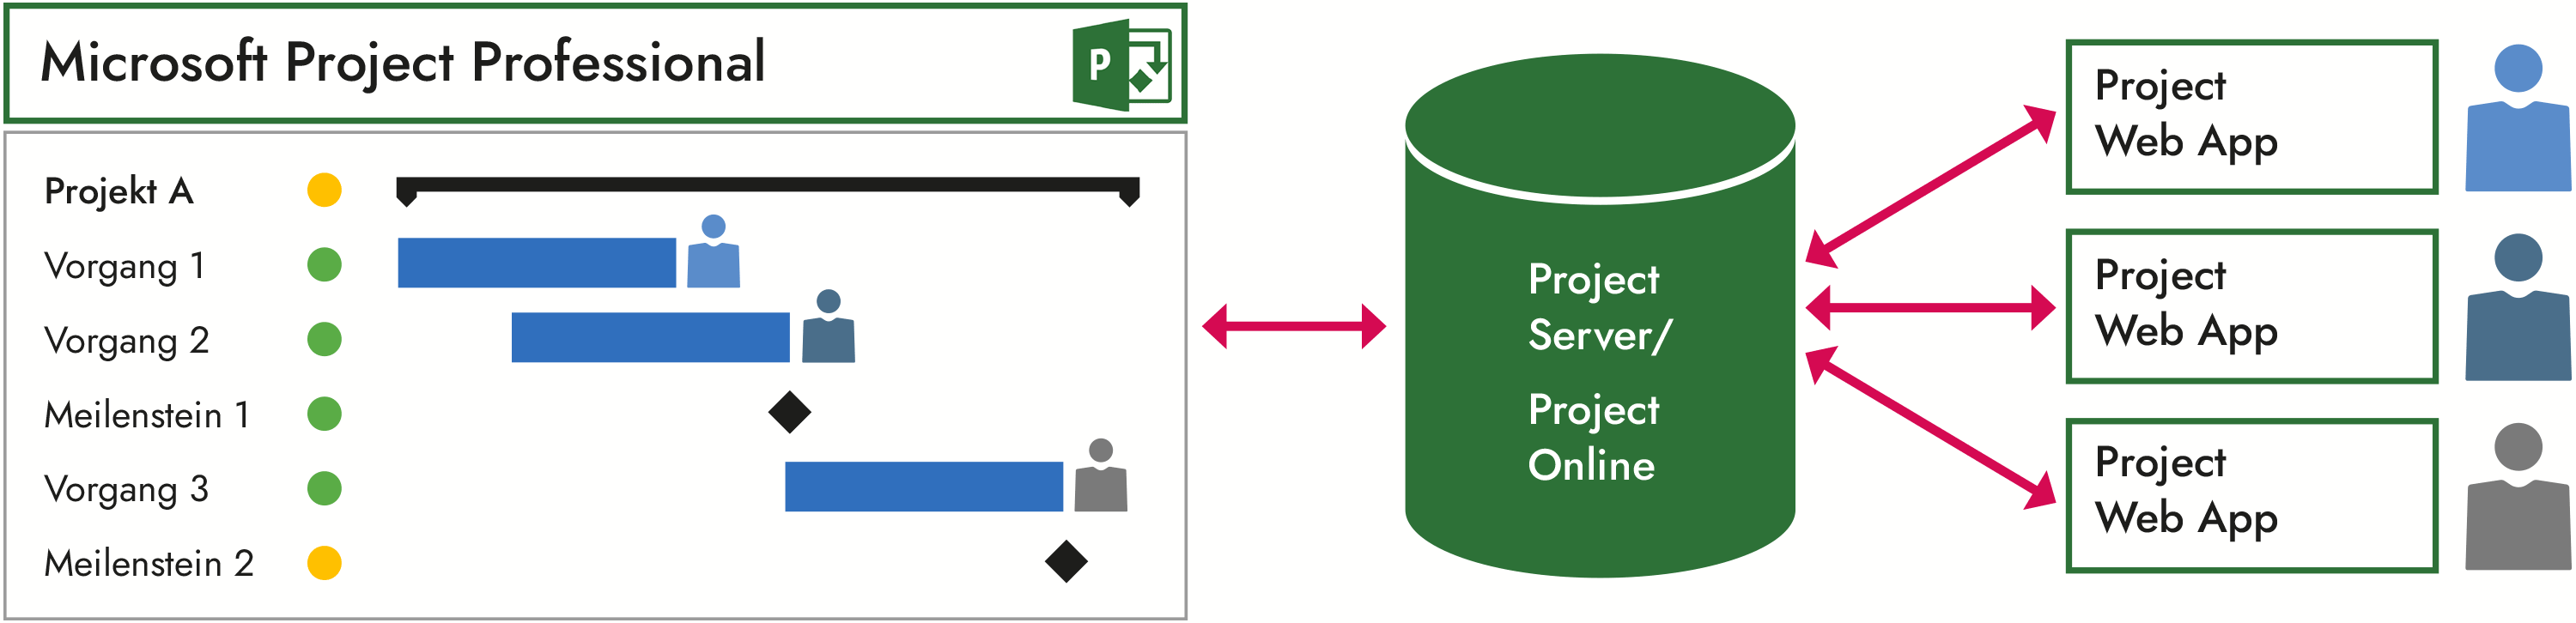 Project Web App